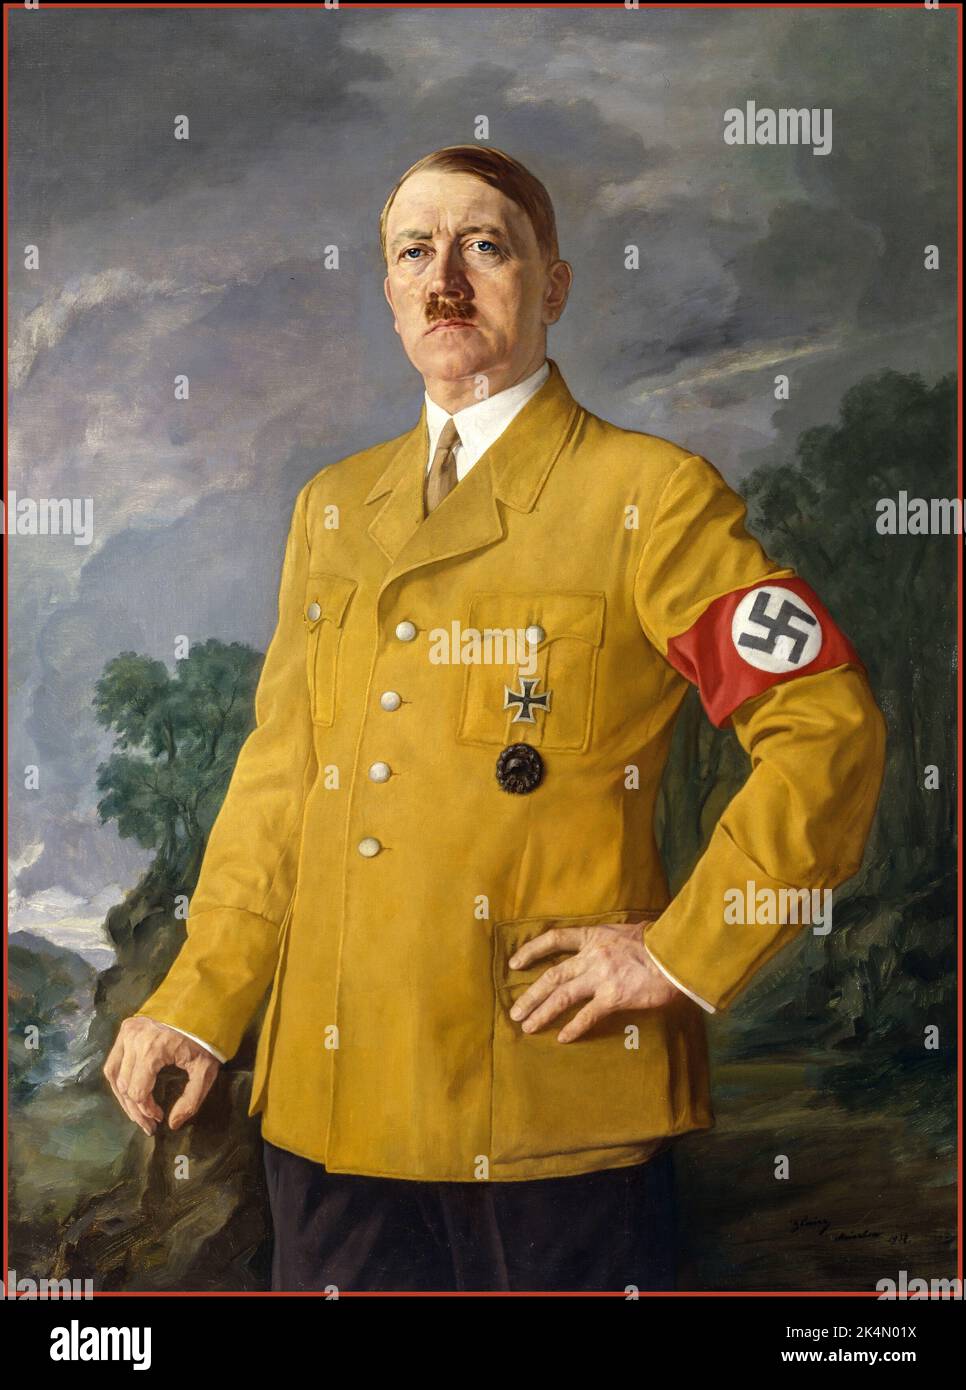 Adolf Hitler OIL PAINTING Der Führer Gemälde Adolf Hitler Portrait painting of Adolf Hitler in uniform with swastika armband by Heinrich Knirr Austrian born German painter 1937 Stock Photo